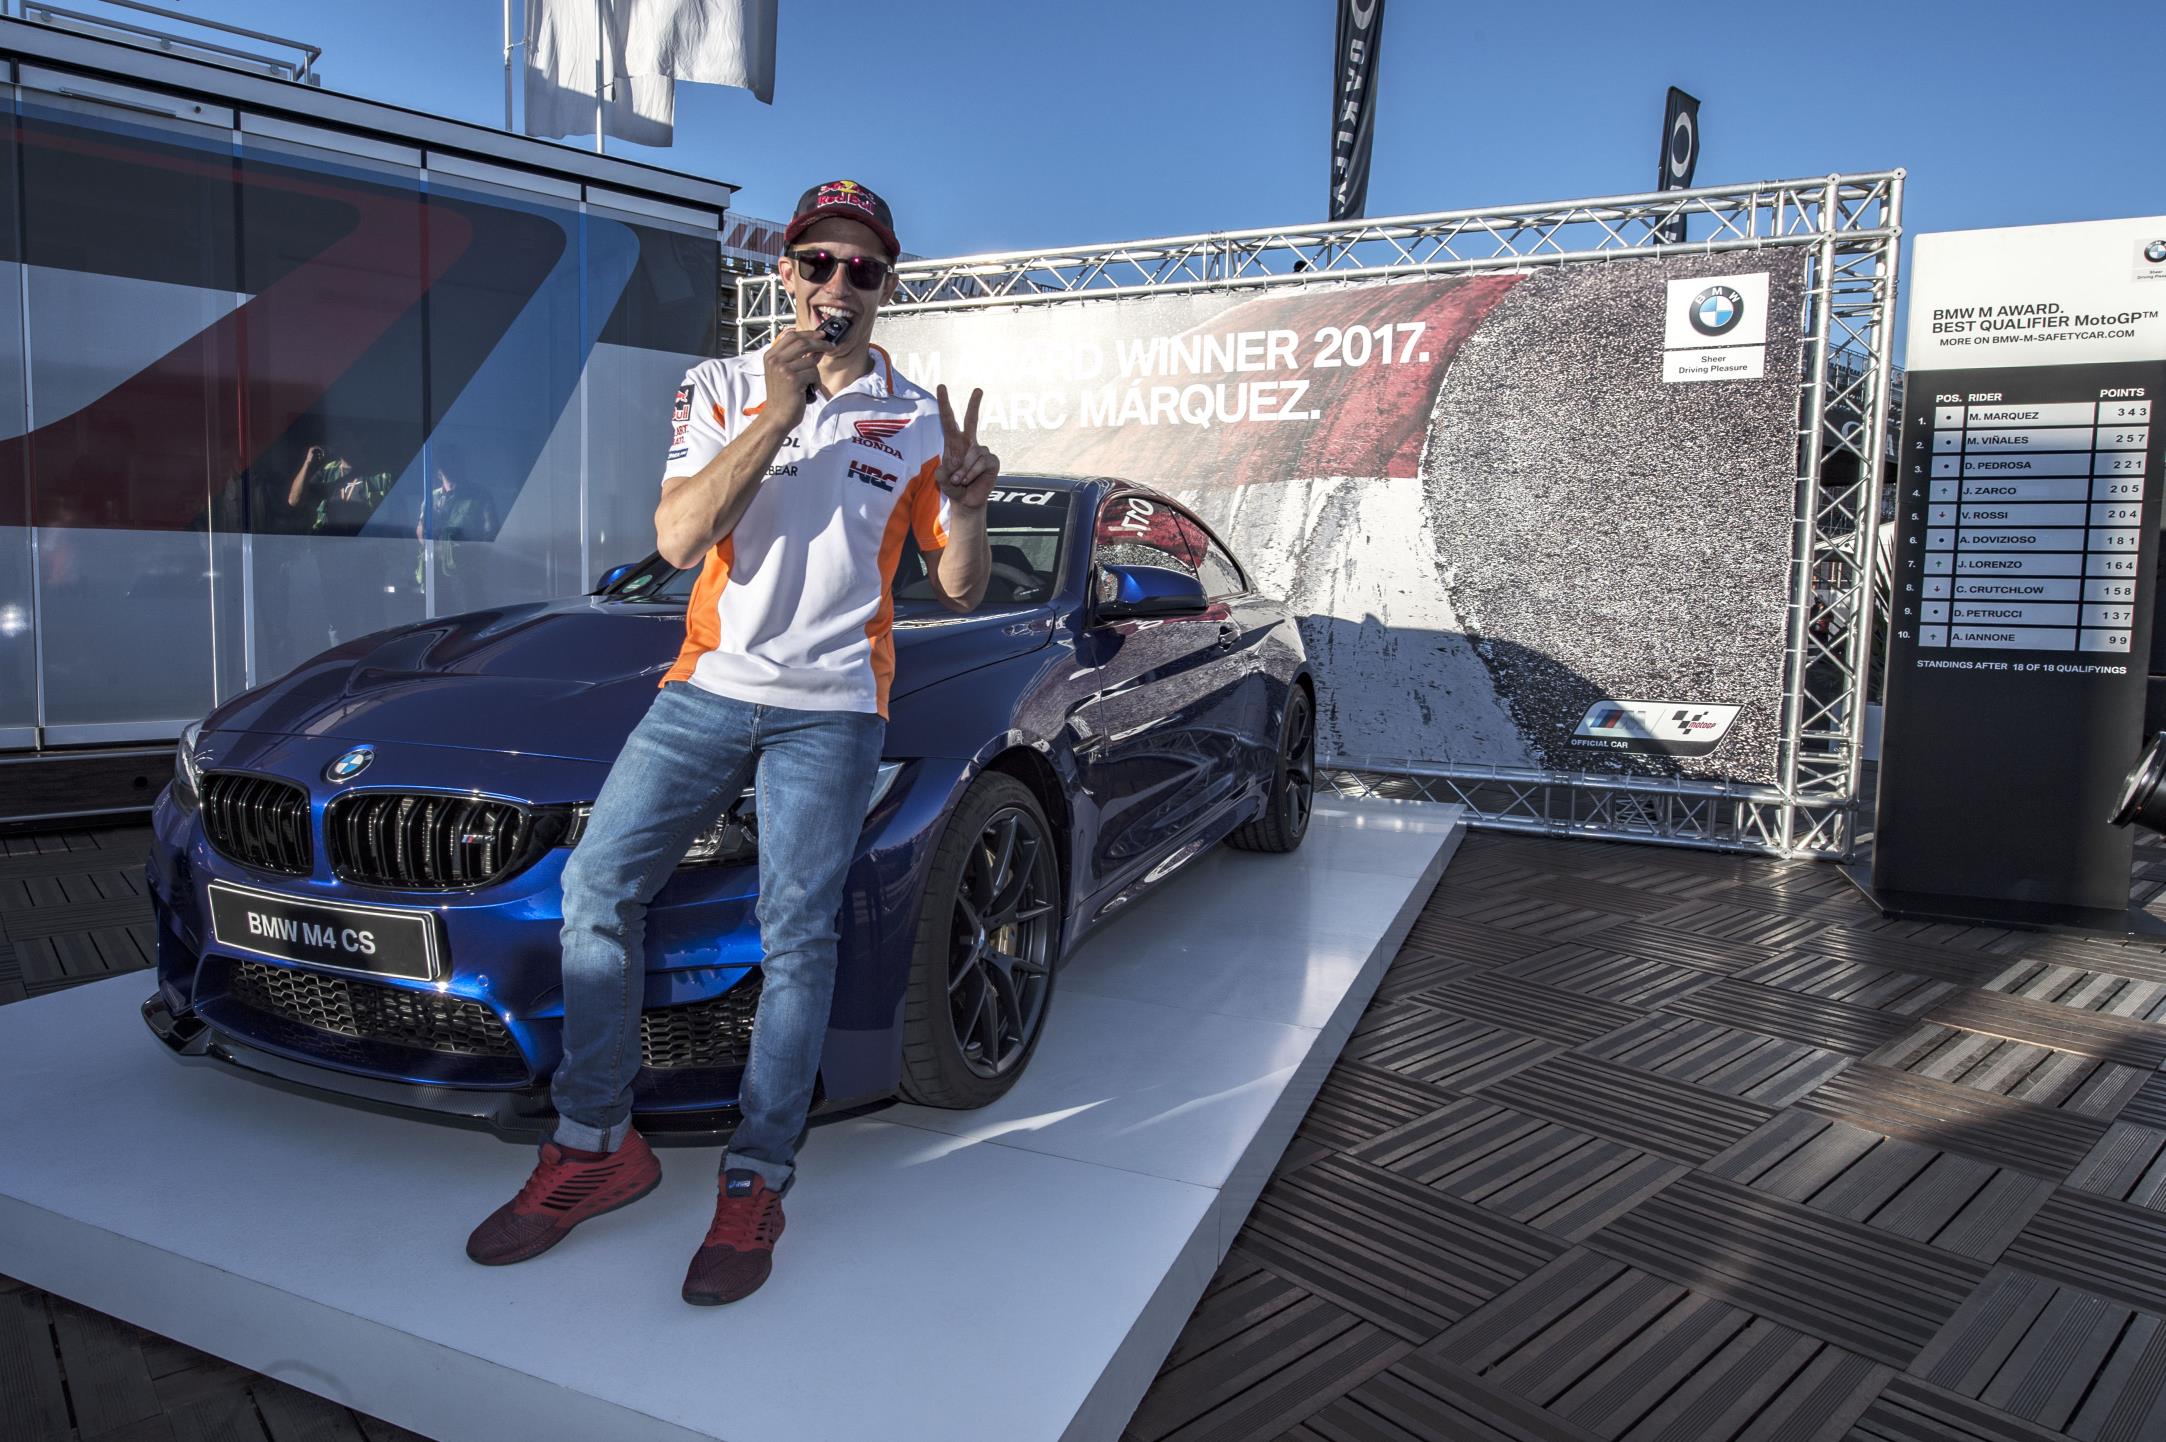 Quinta victoria de Márquez en el BMW M Award